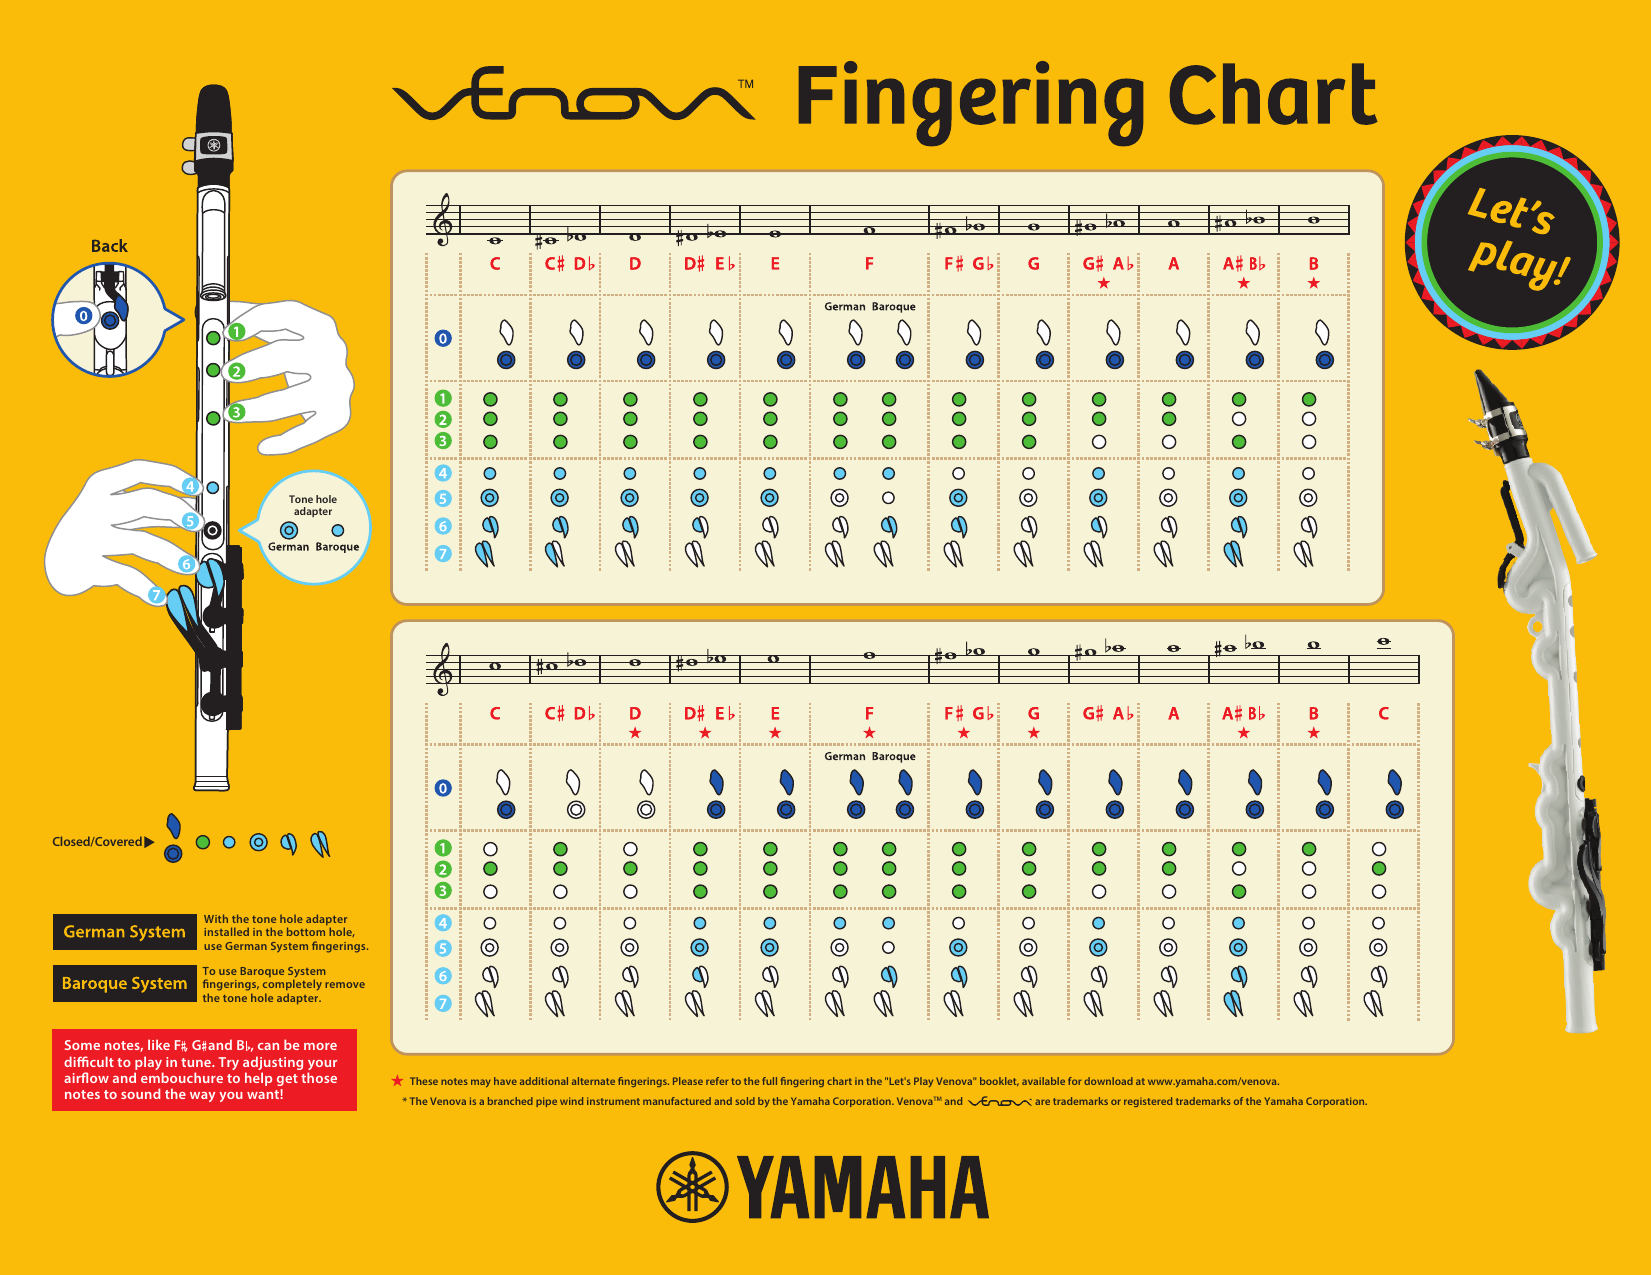 Yamaha Venova Fingering Chart Manualzz